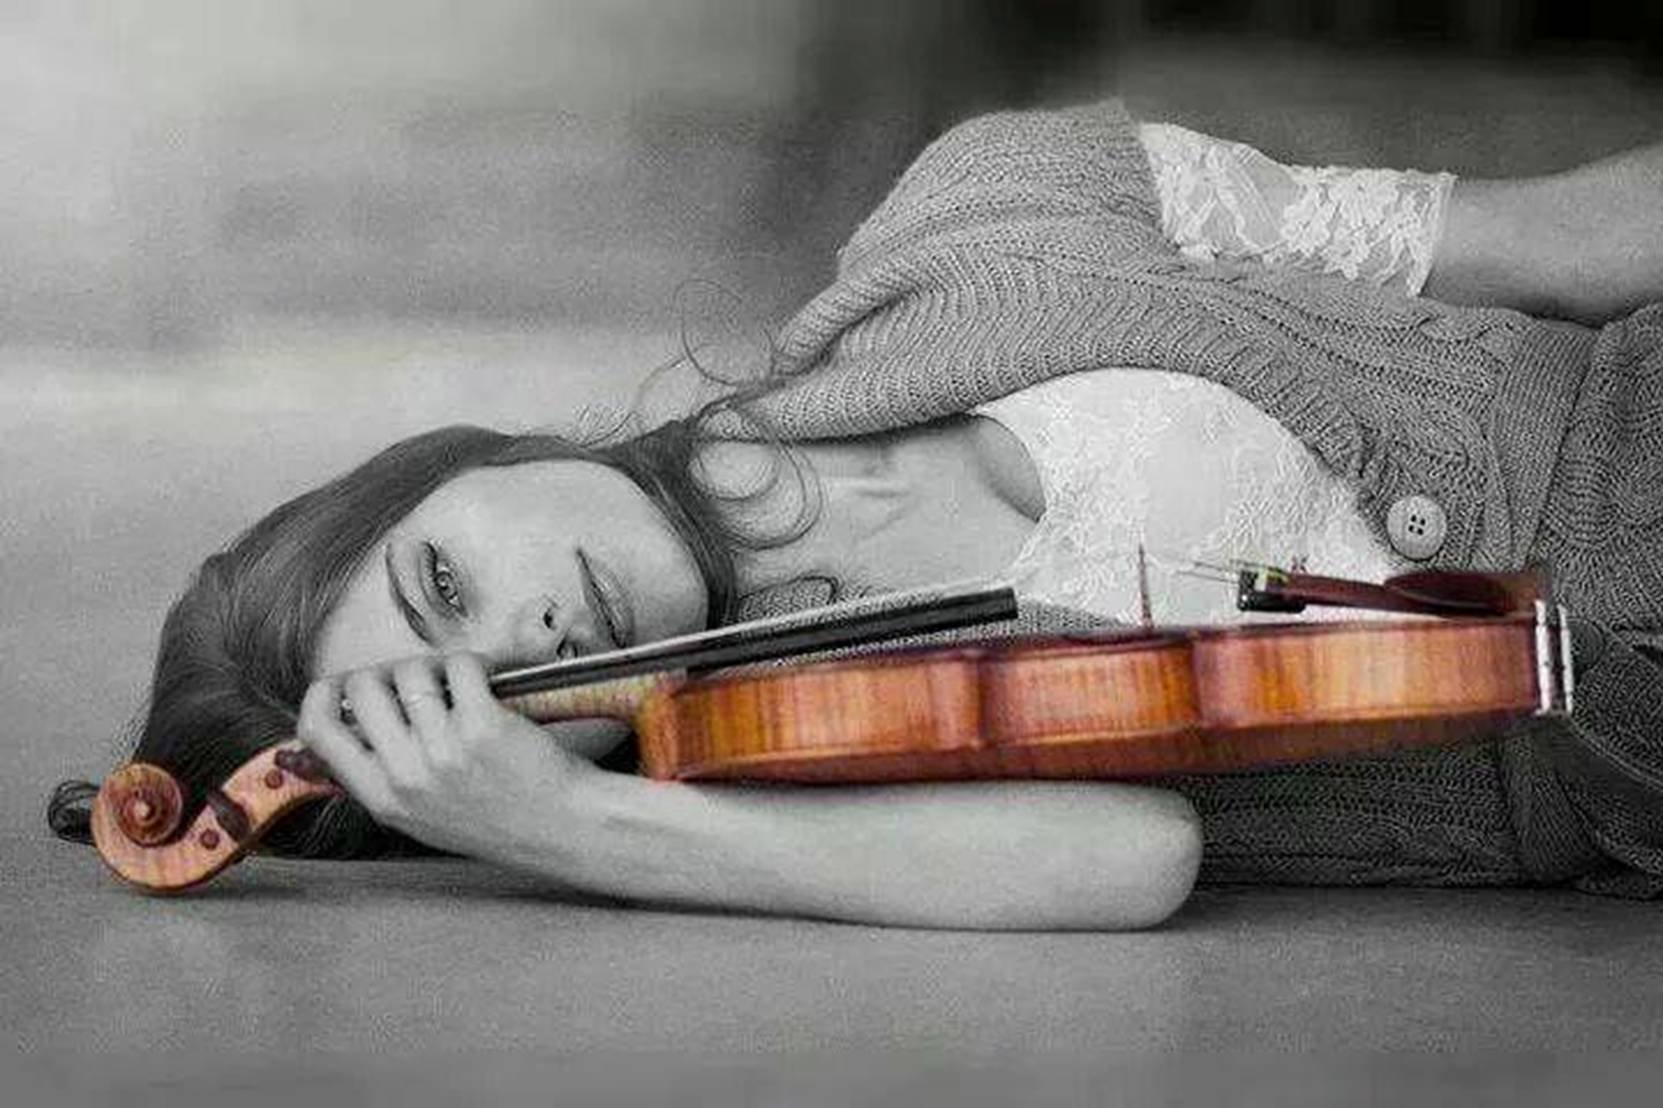 Скрипка о любви. Фотосессия со скрипкой. Девушки со скрипкой. Скрипка плачет. Скрипка сердце.